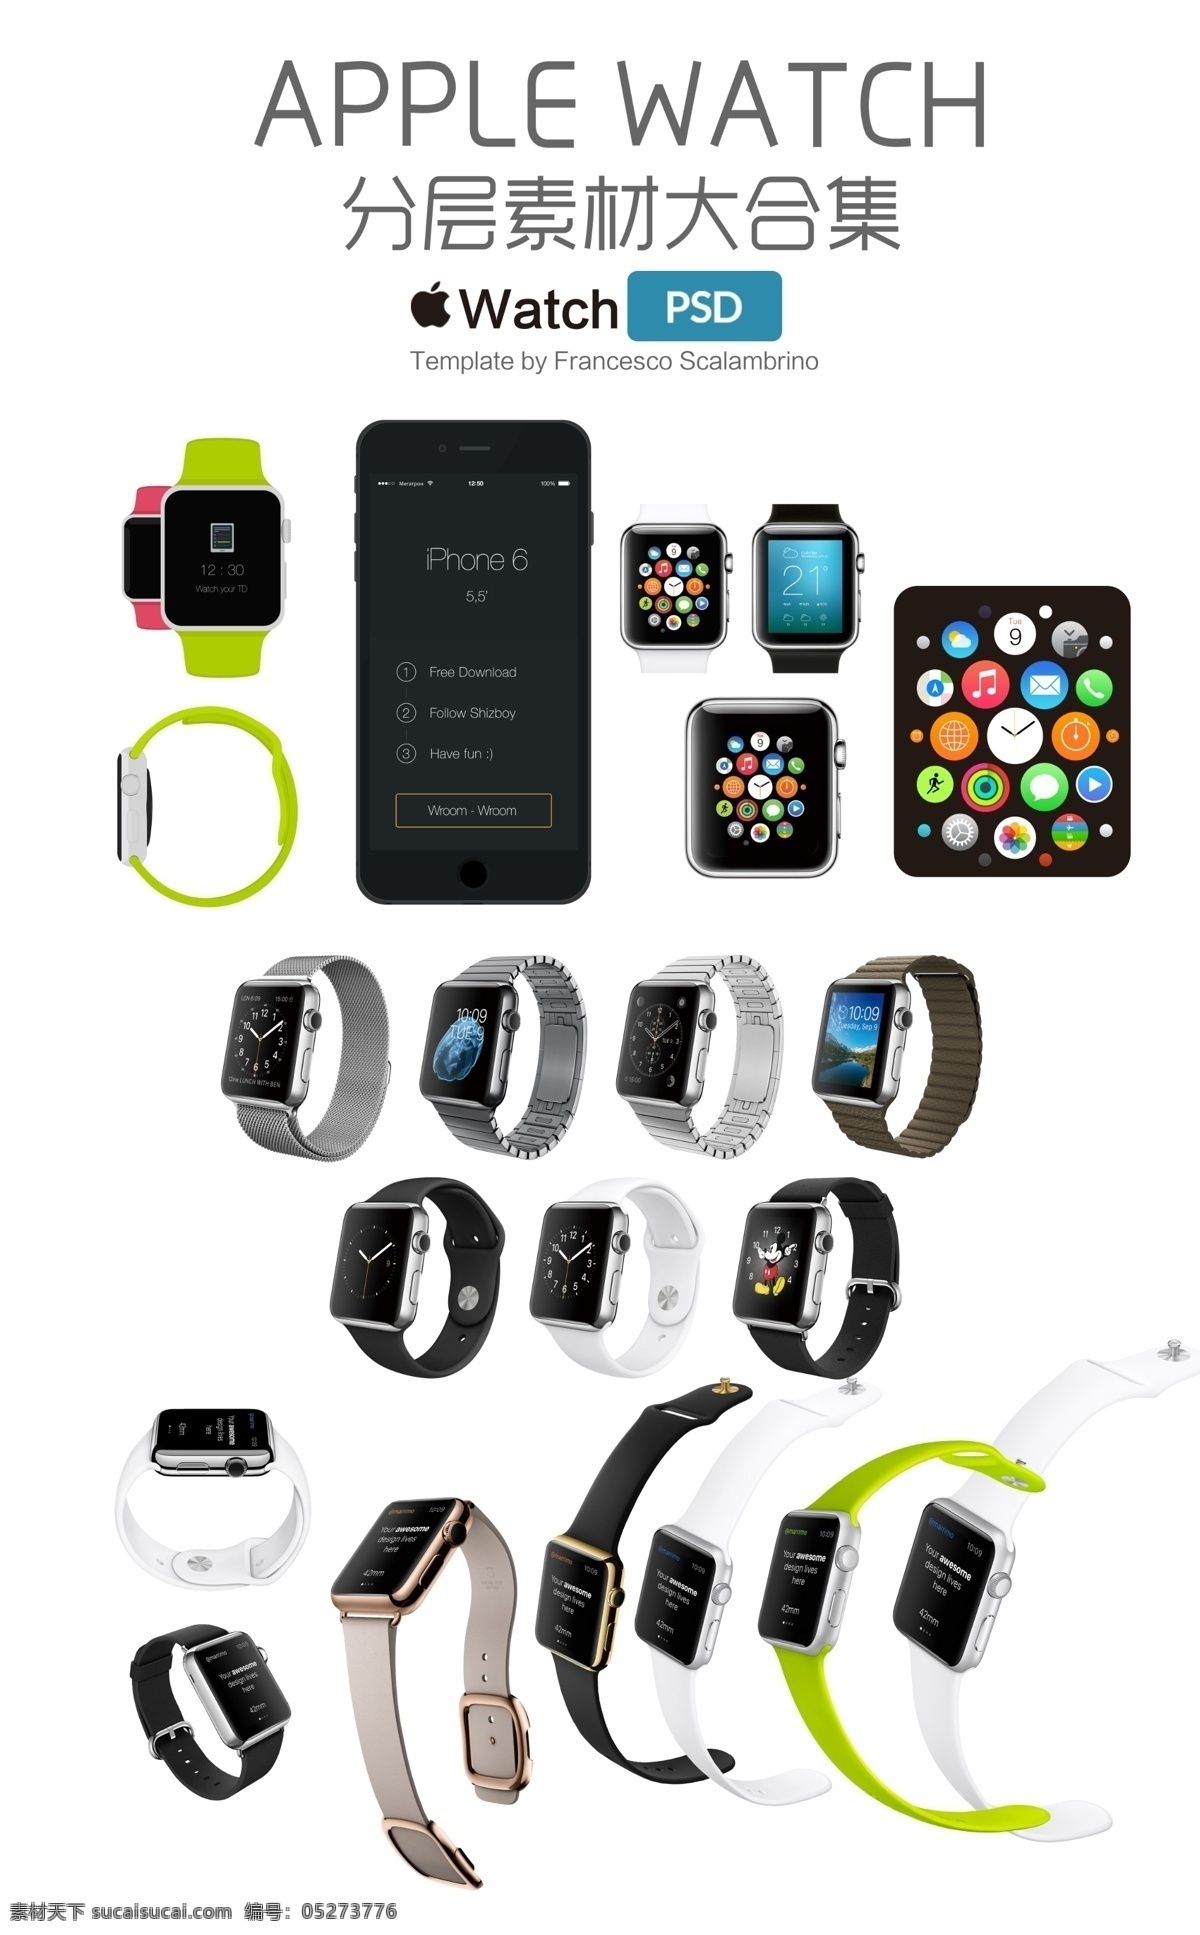 apple watch 集合 applewatch iwatch 苹果手表 手表素材 手表 iphone6 iphone 苹果ui 照片 城市建筑 分层 白色